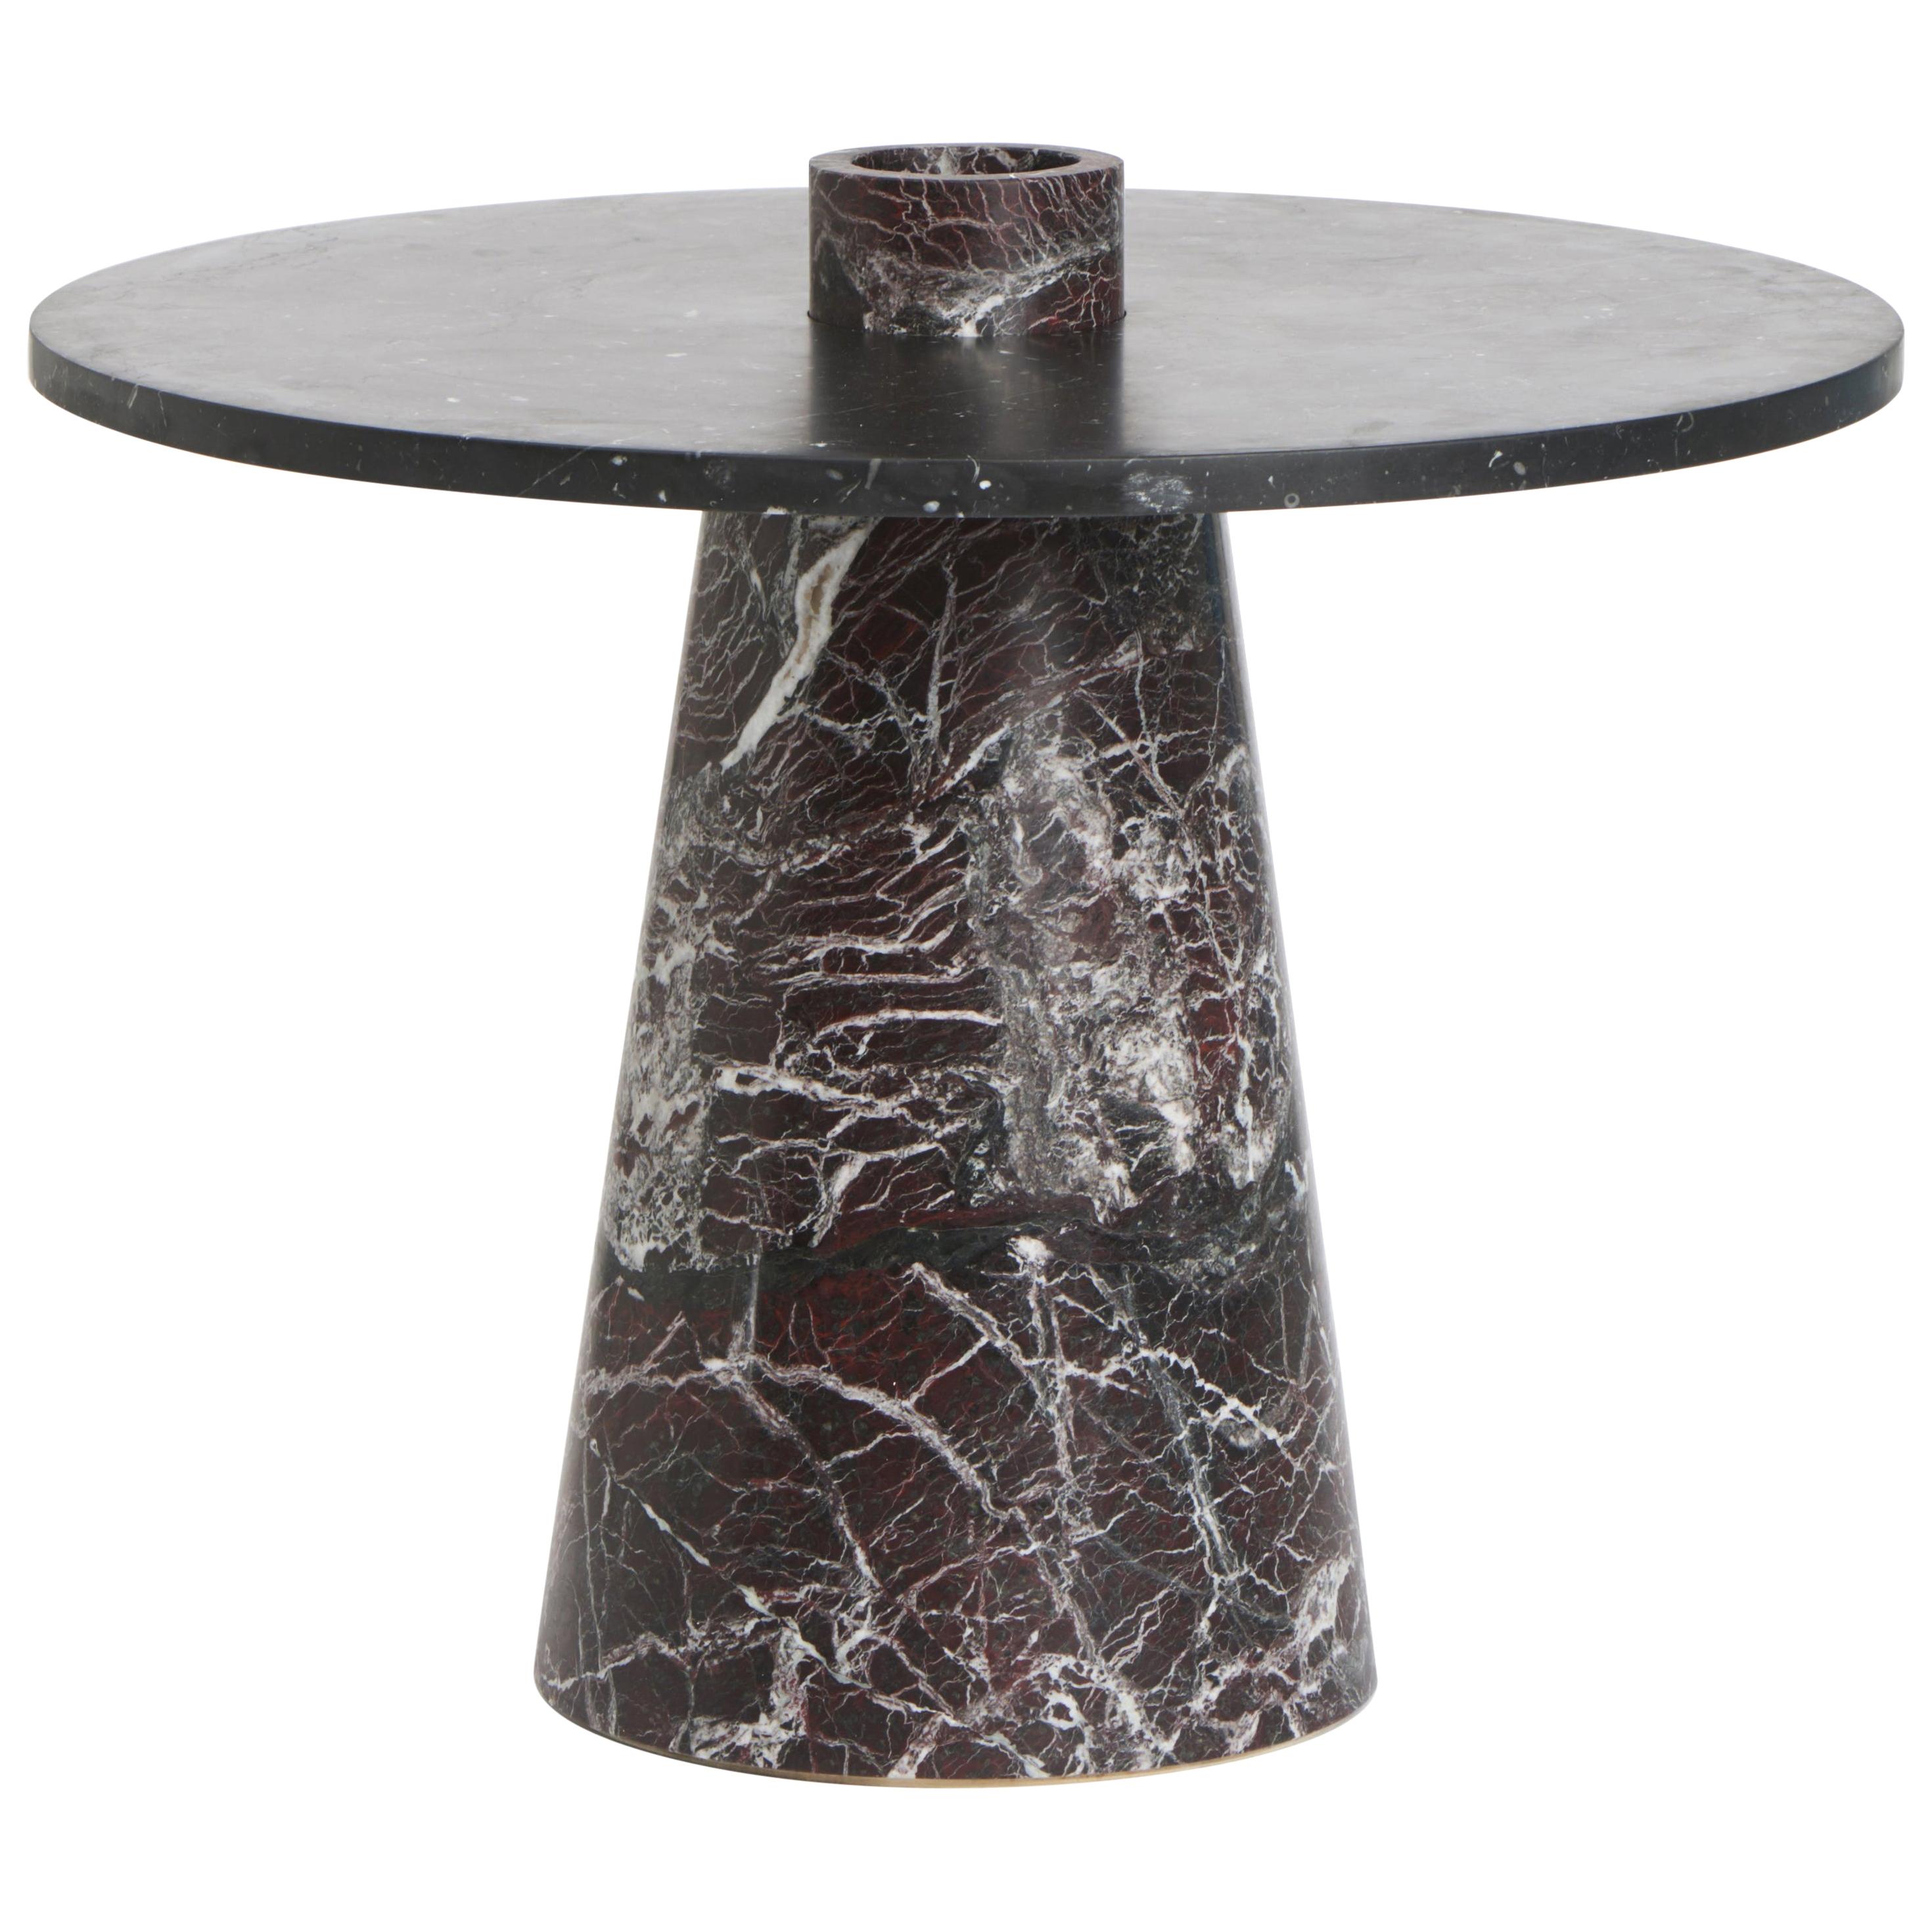 New Modern Side Table with Accessories in Marble, creator Karen Chekerdjian